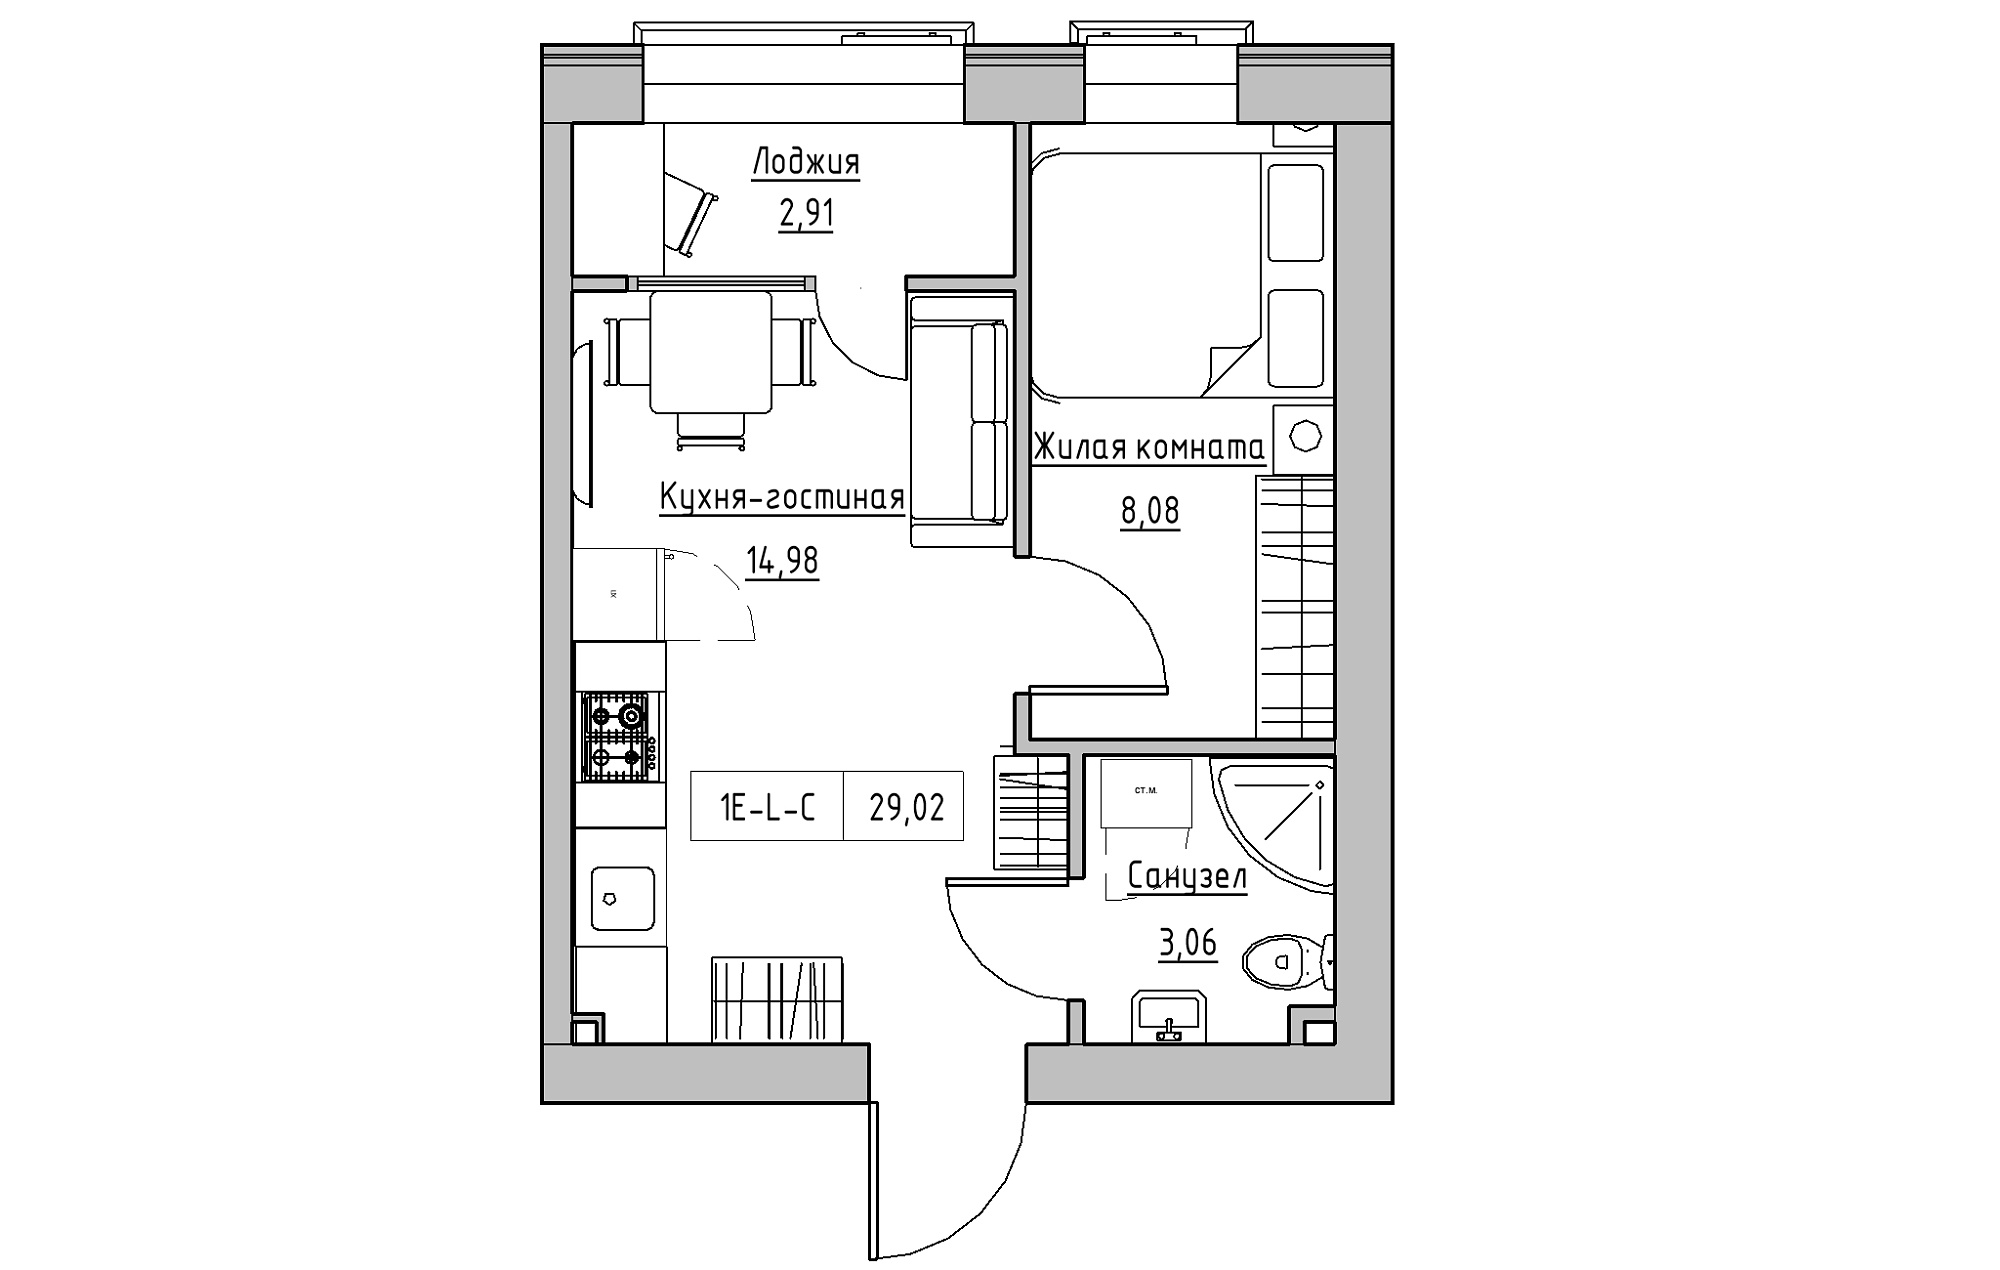 Planning 1-rm flats area 29.01m2, KS-018-02/0007.